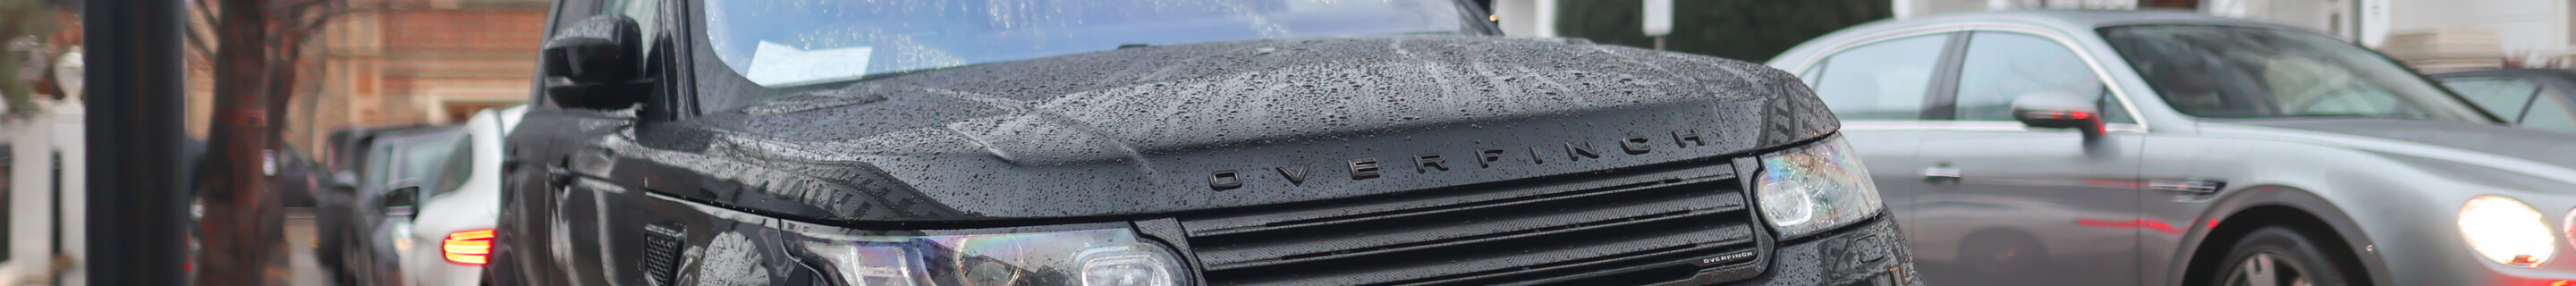 Land Rover Range Rover Overfinch GT SVR